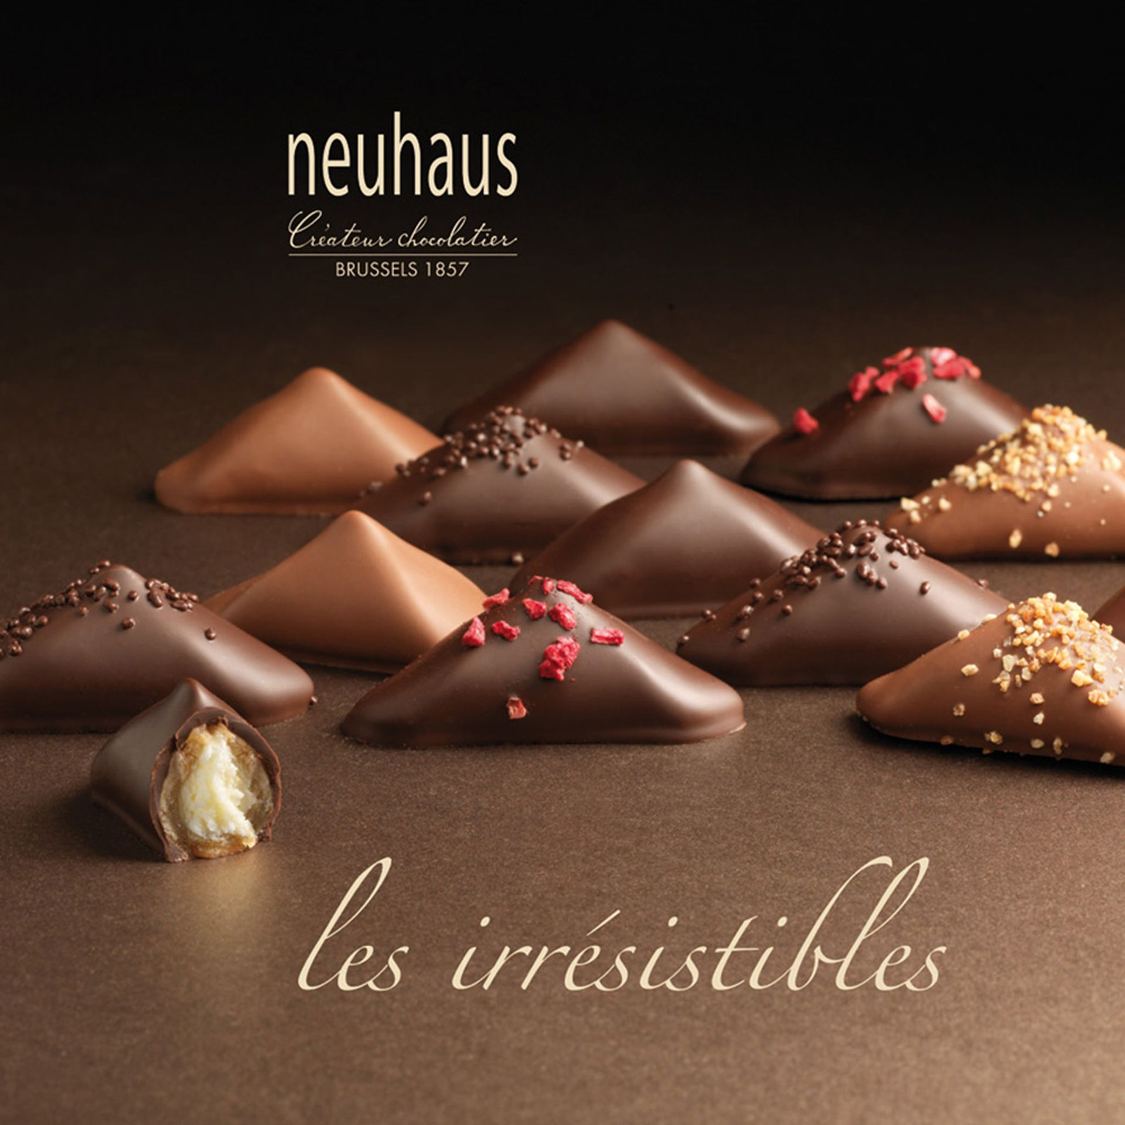 Neuhaus reclamebeeld Les Irrésistibles poster